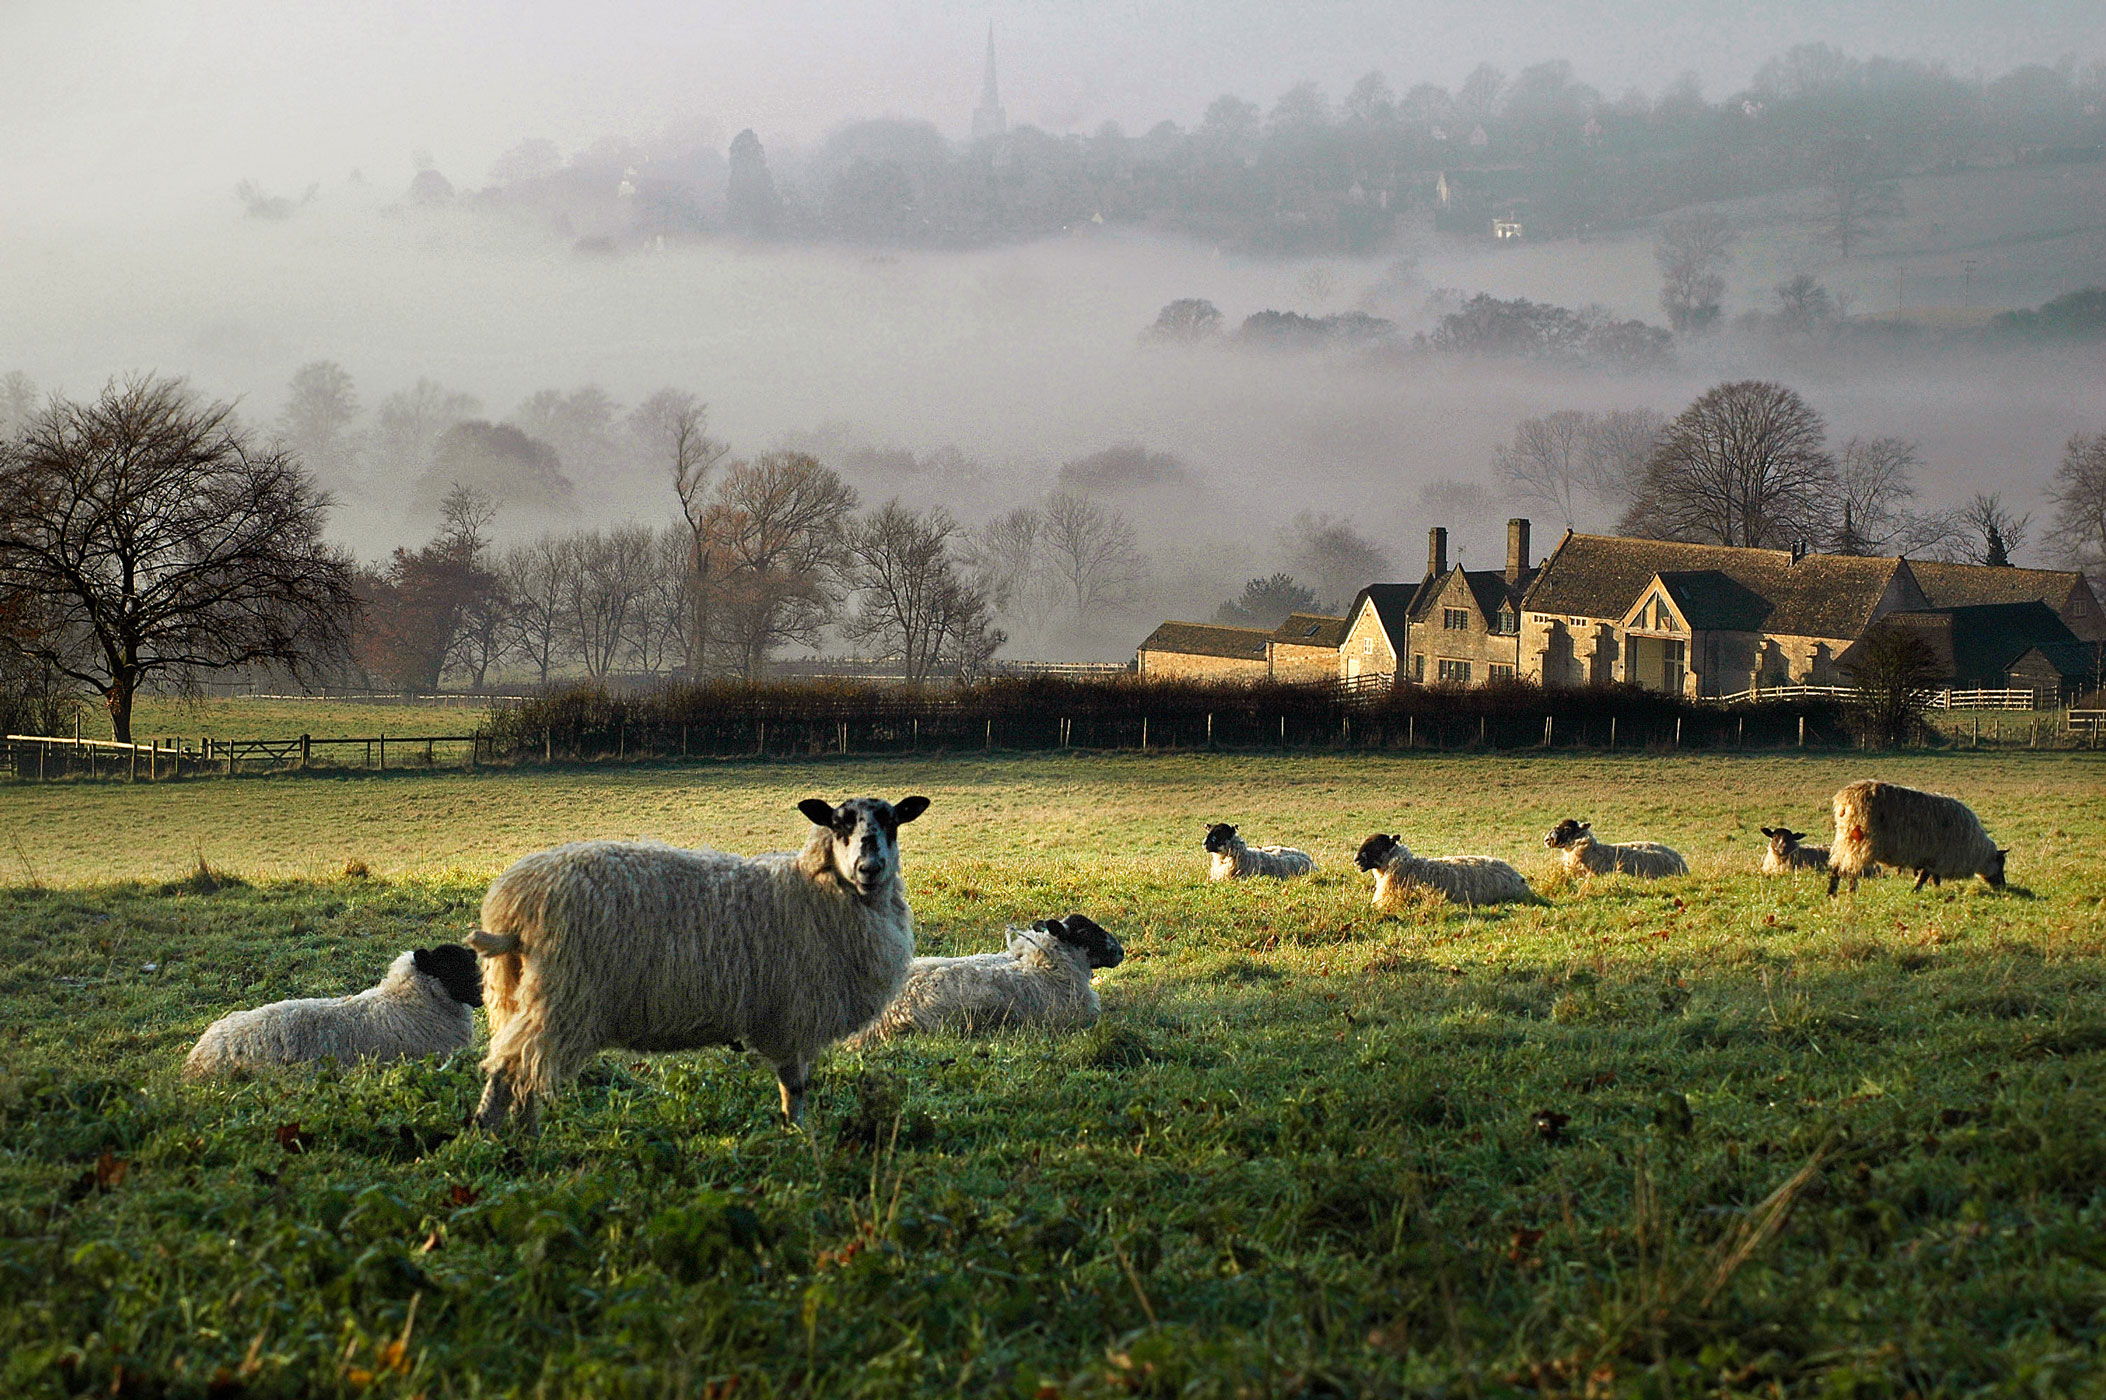 People lived living in the countryside. Котсуолдс Англия ферма. Сельская местность в Англии Котсуолд. Йоркшир Англия ферма. Котсуолдс Англия овцы.